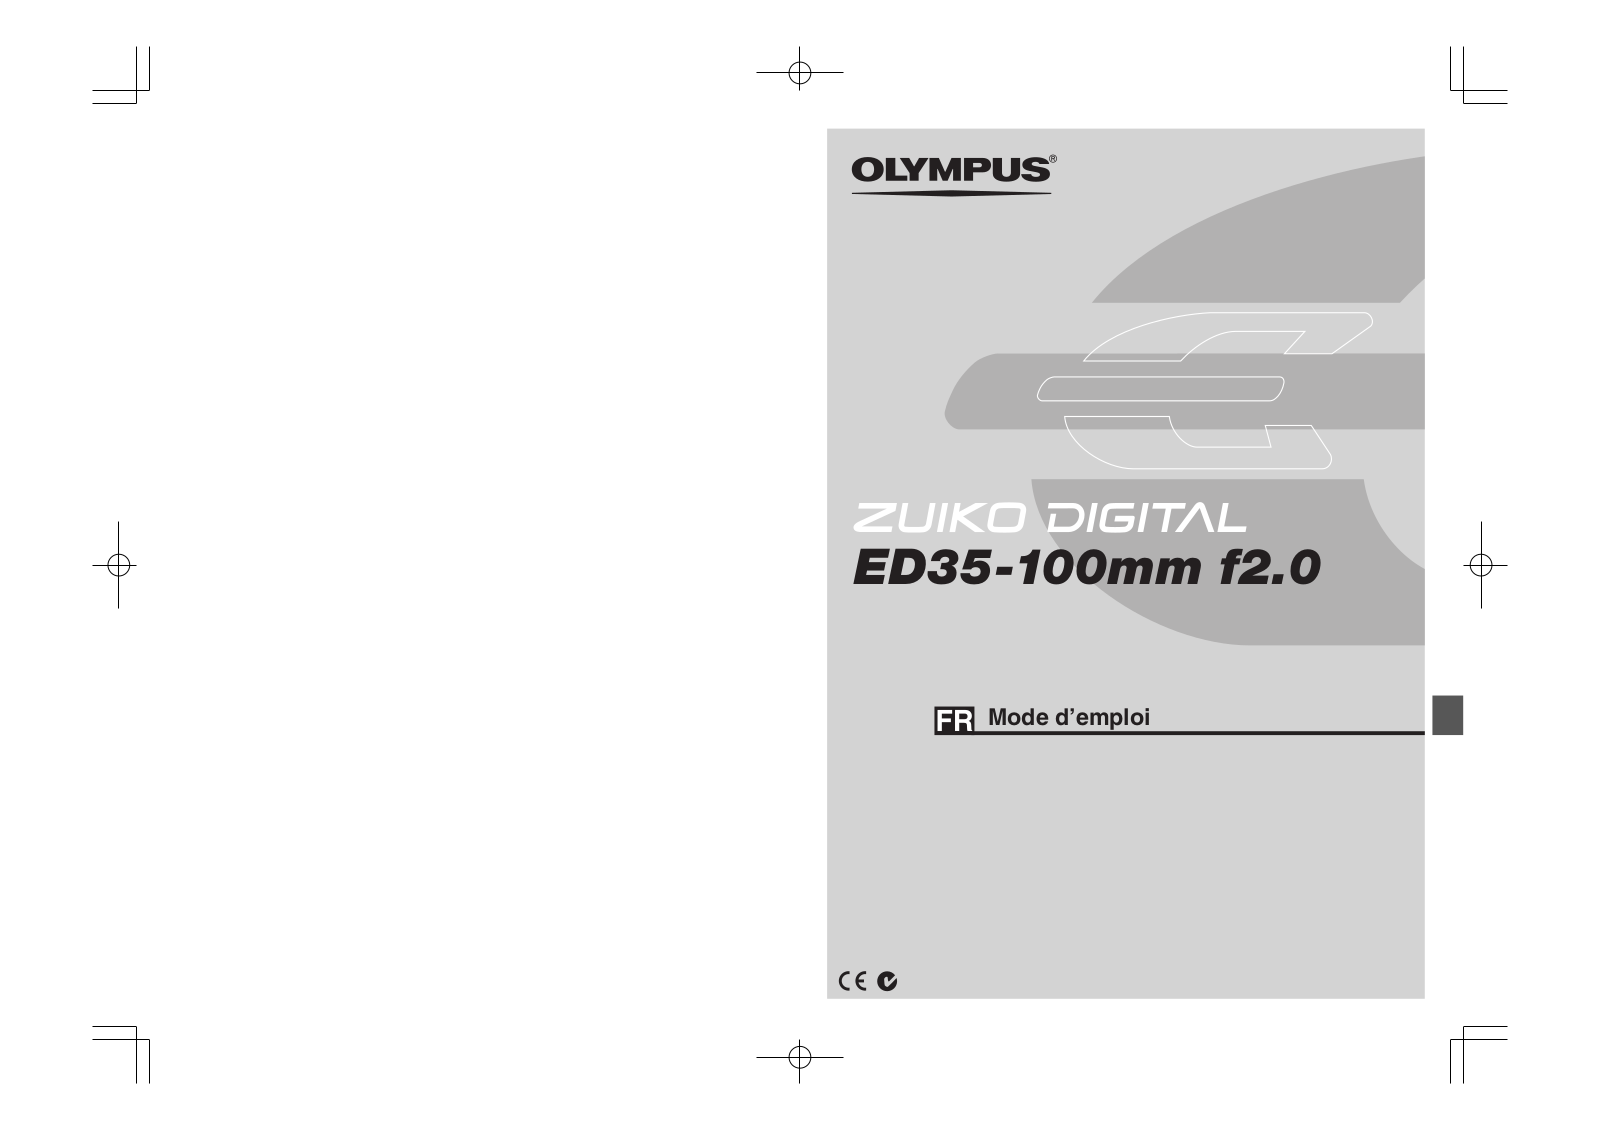 OLYMPUS ZUIKO DIGITAL ED35-100mm f2.0 User Manual